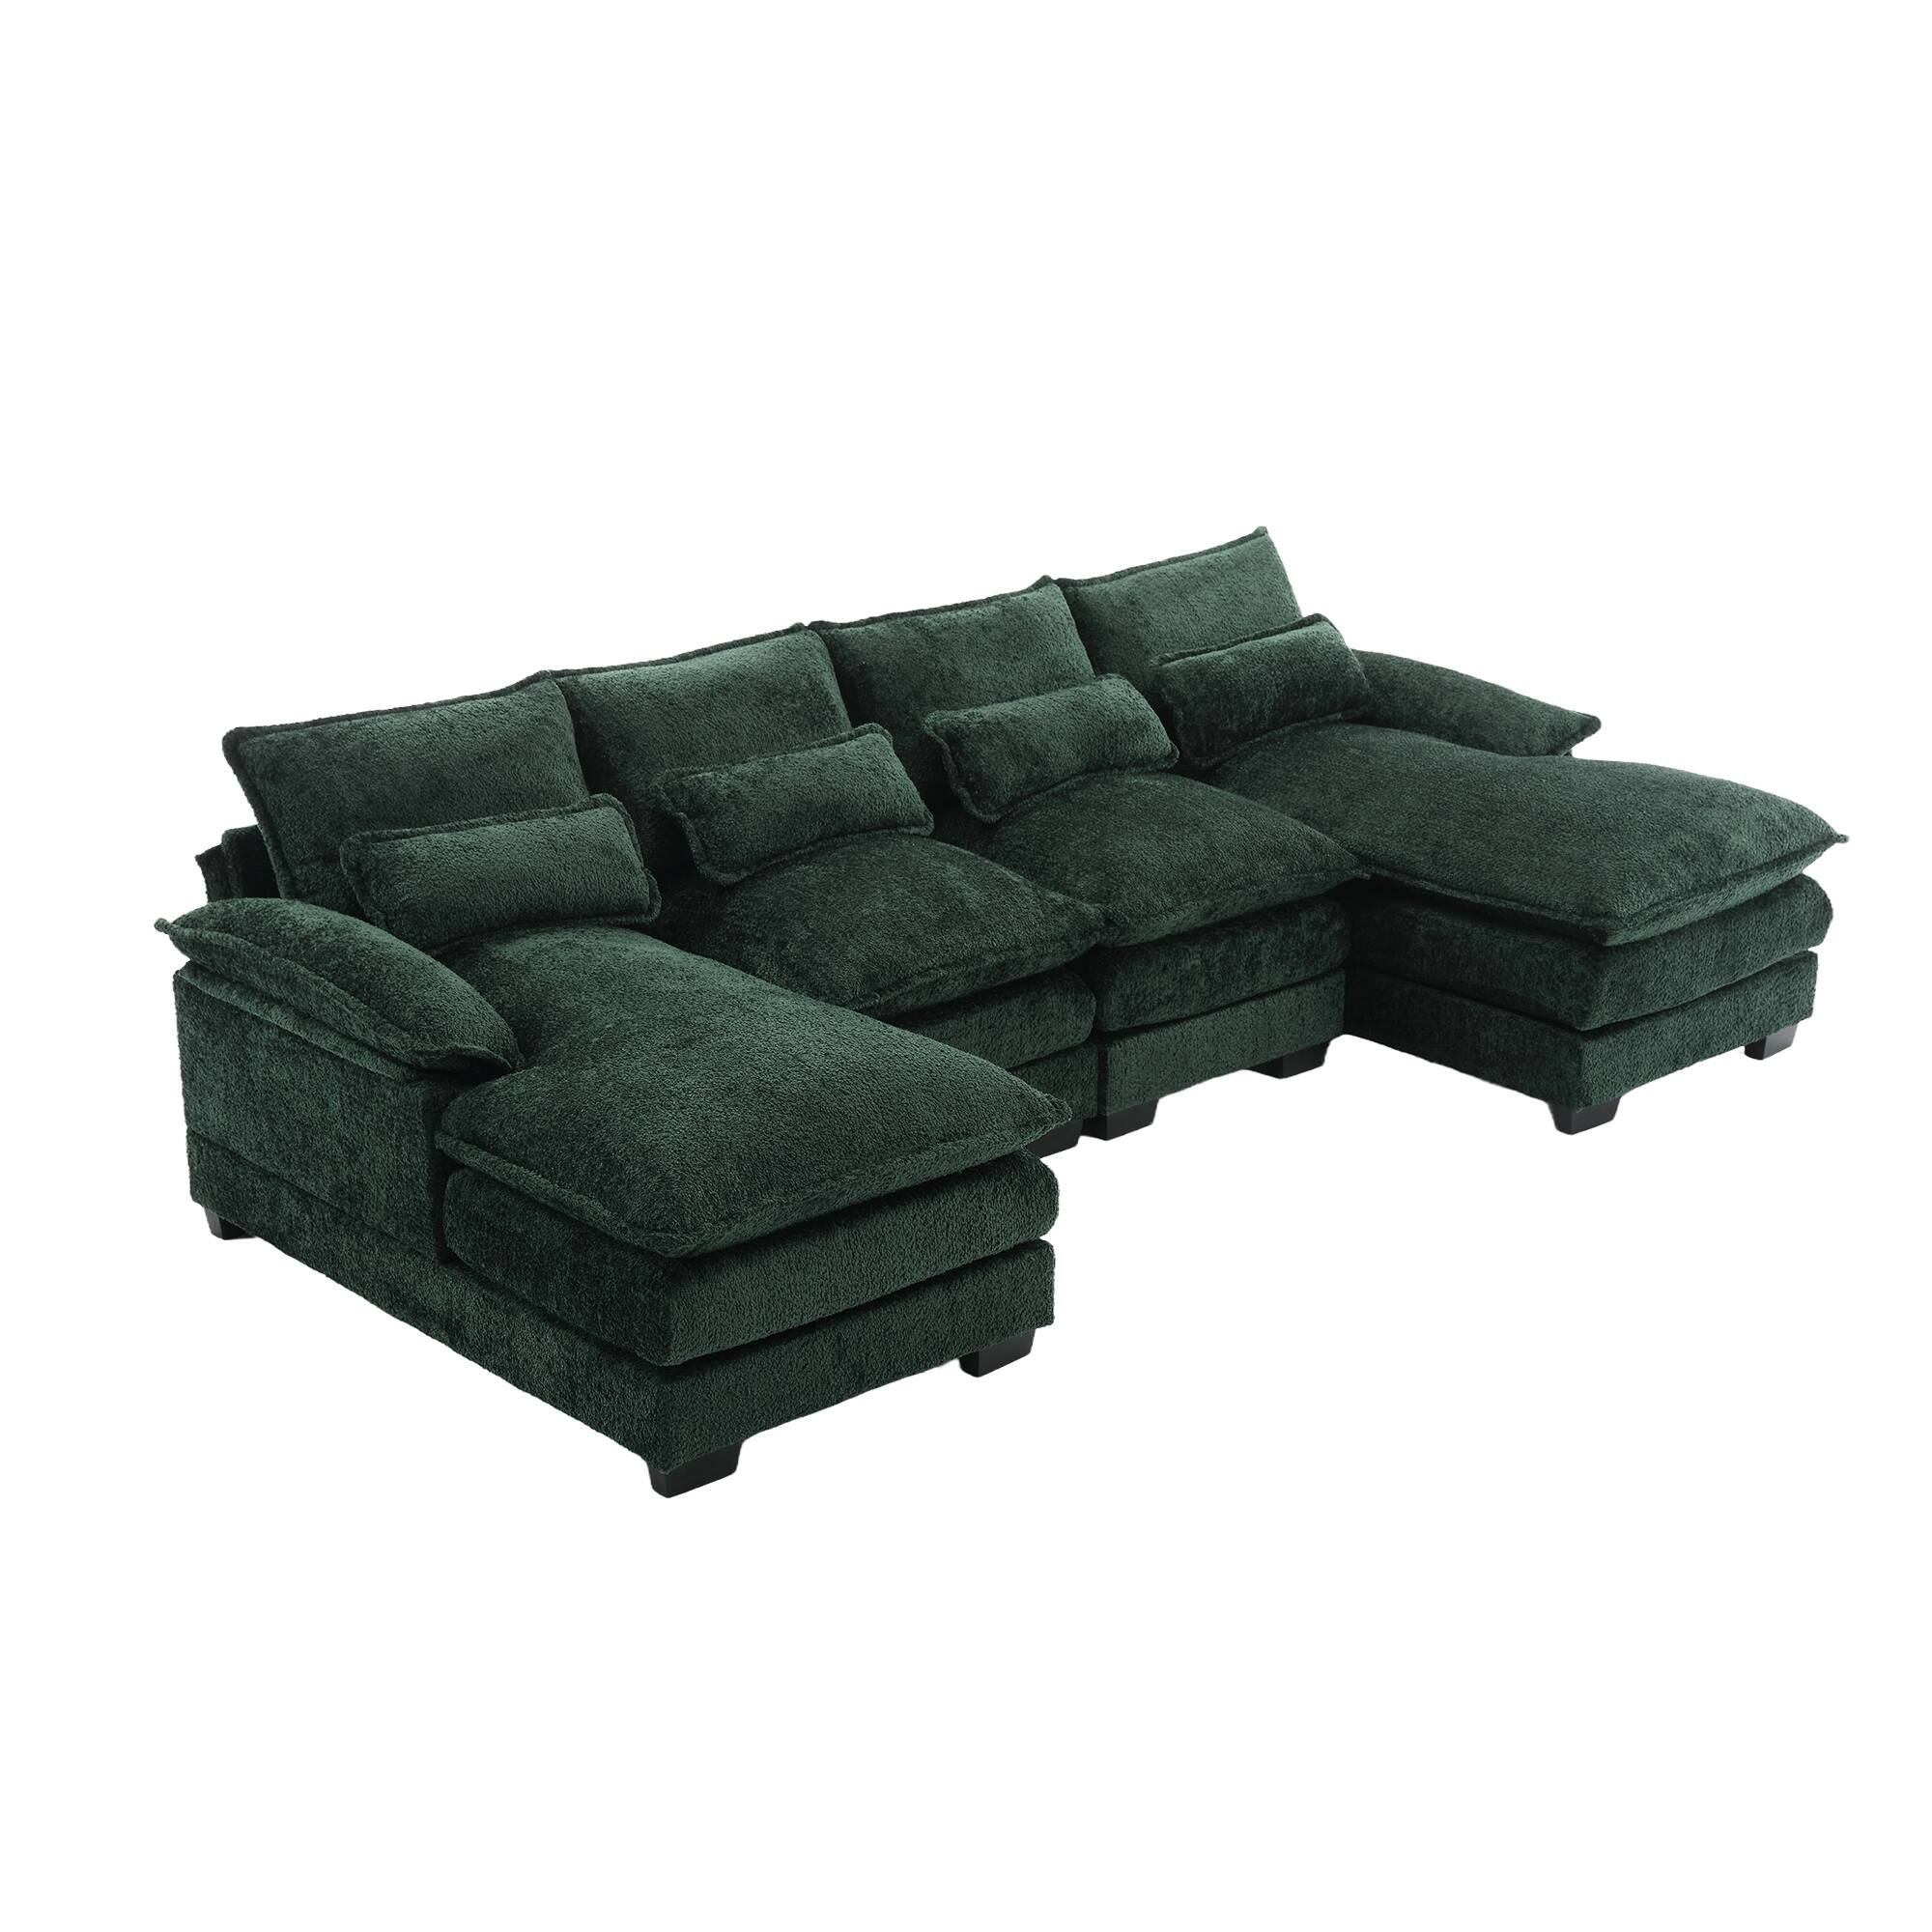 Recliner Sofa, U-shaped Sectional Sleeper Sofa with Chaise, Modular ...